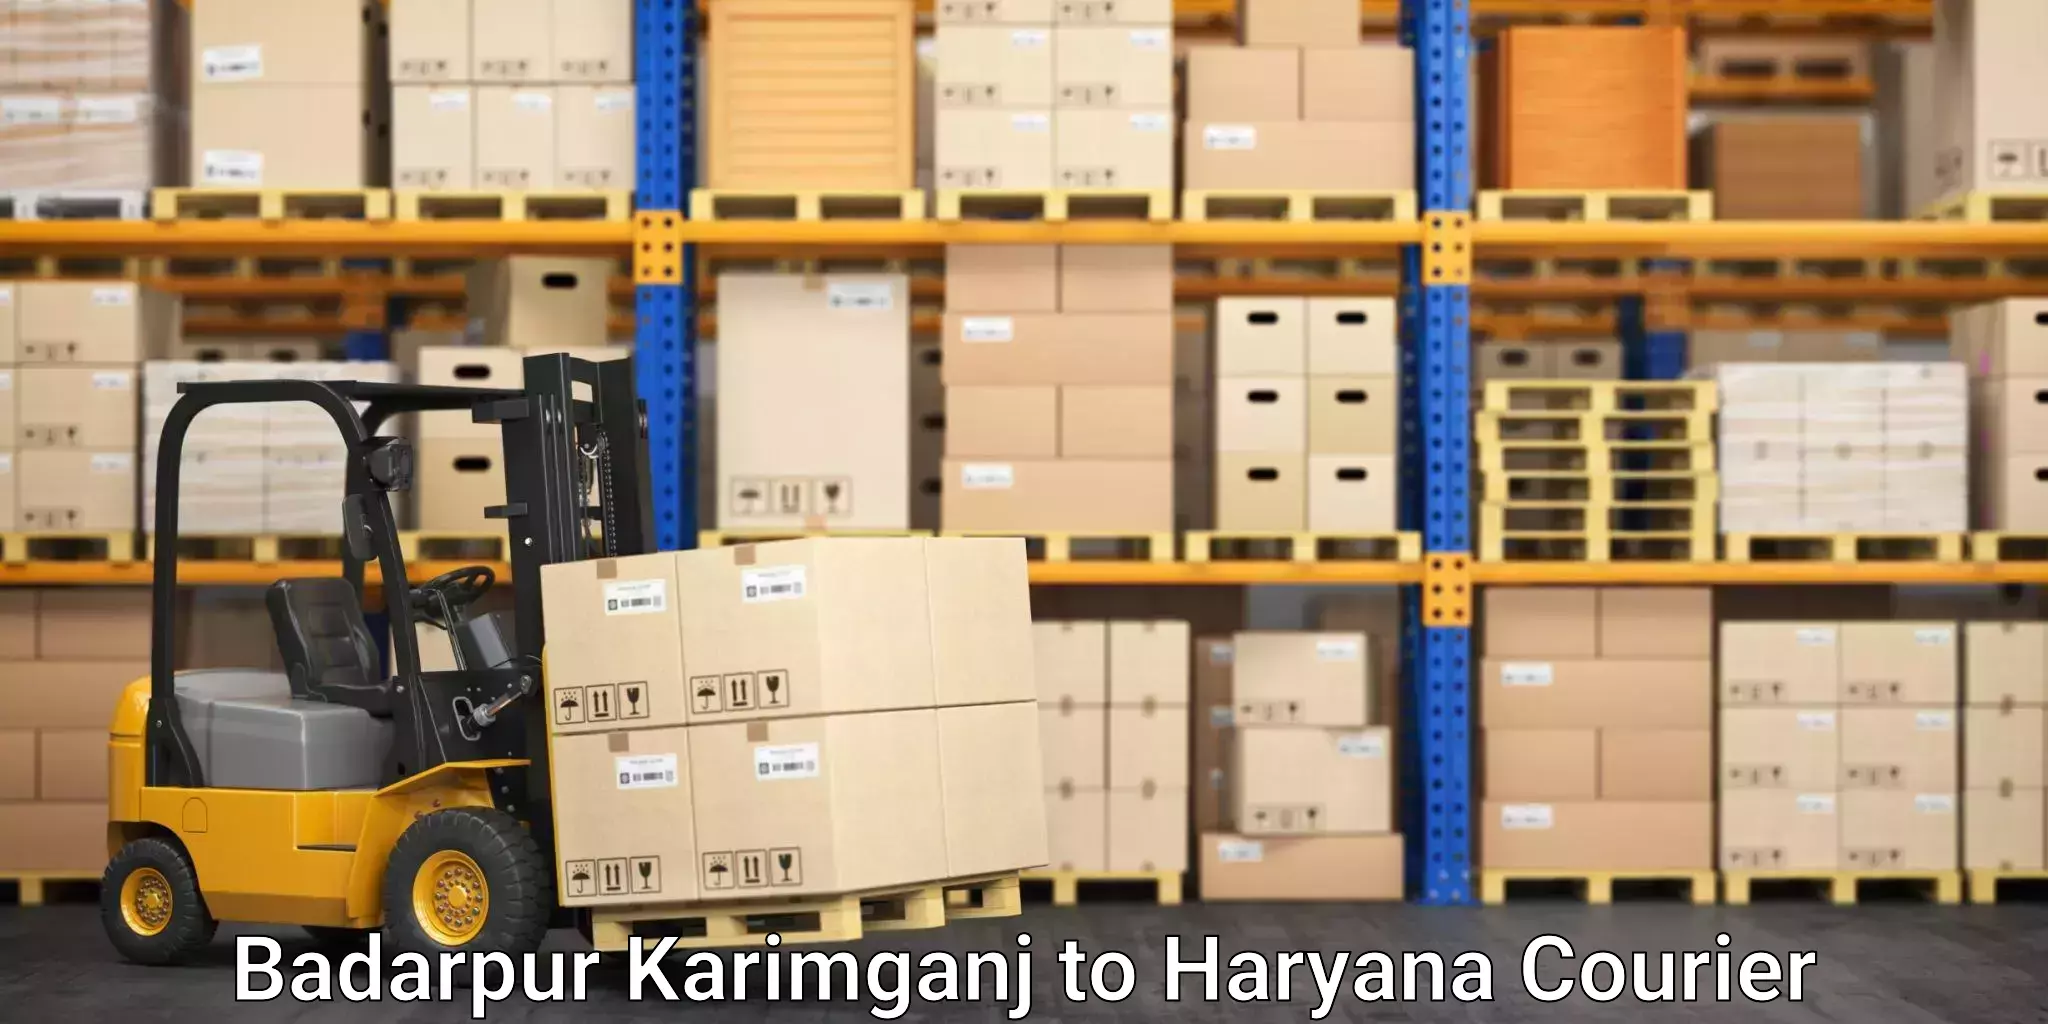 Urban courier service Badarpur Karimganj to Chaudhary Charan Singh Haryana Agricultural University Hisar